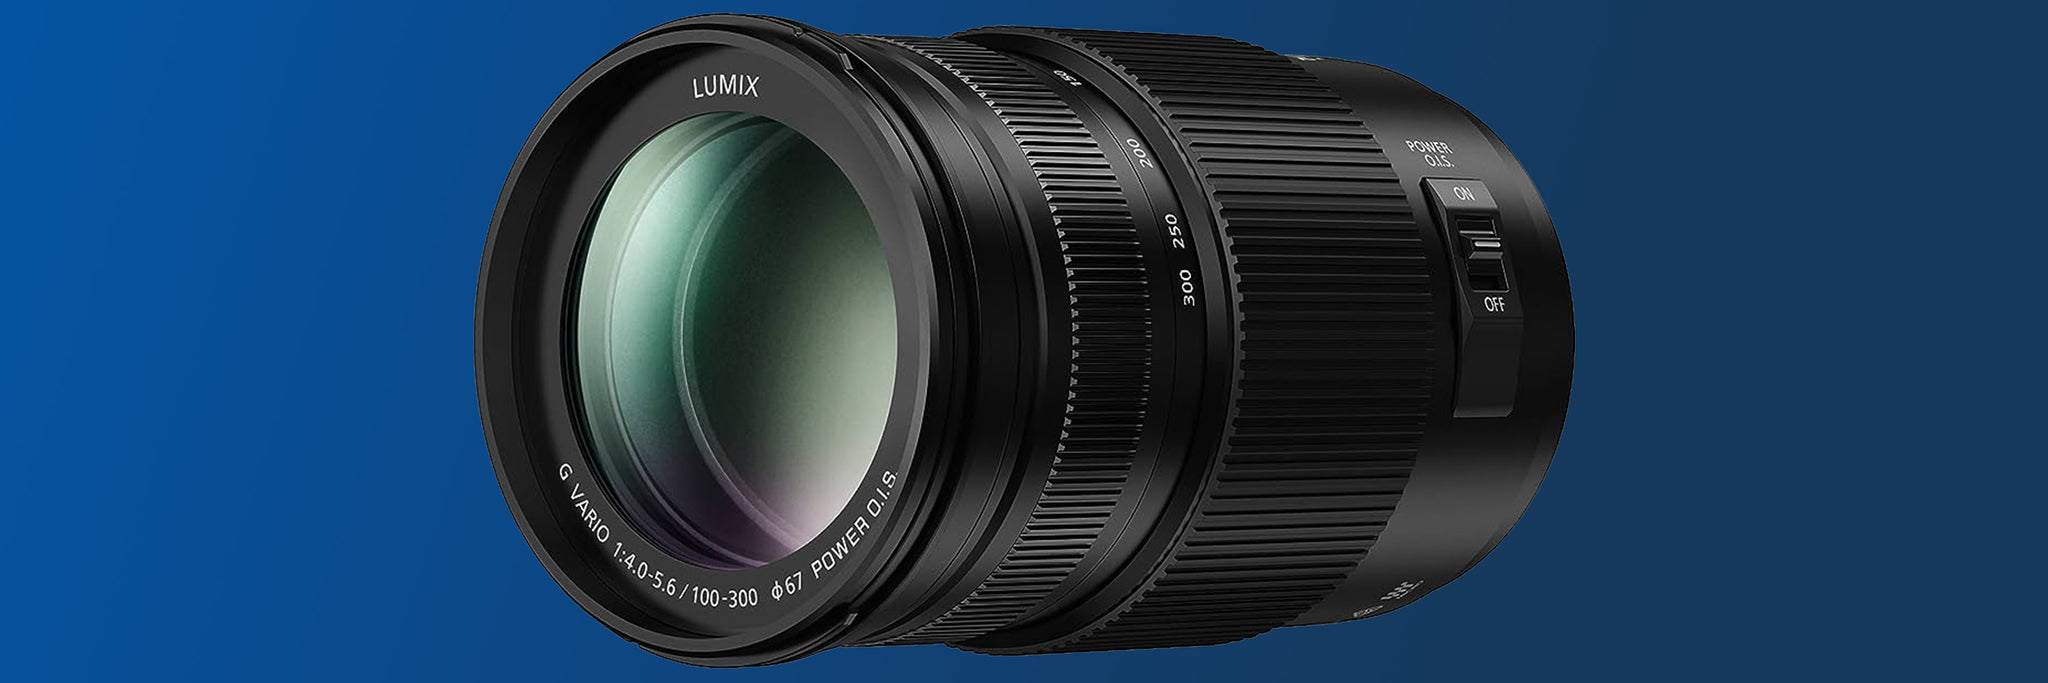 Panasonic 100-300mm f/4.0-5.6 II LUMIX G Vario Lens